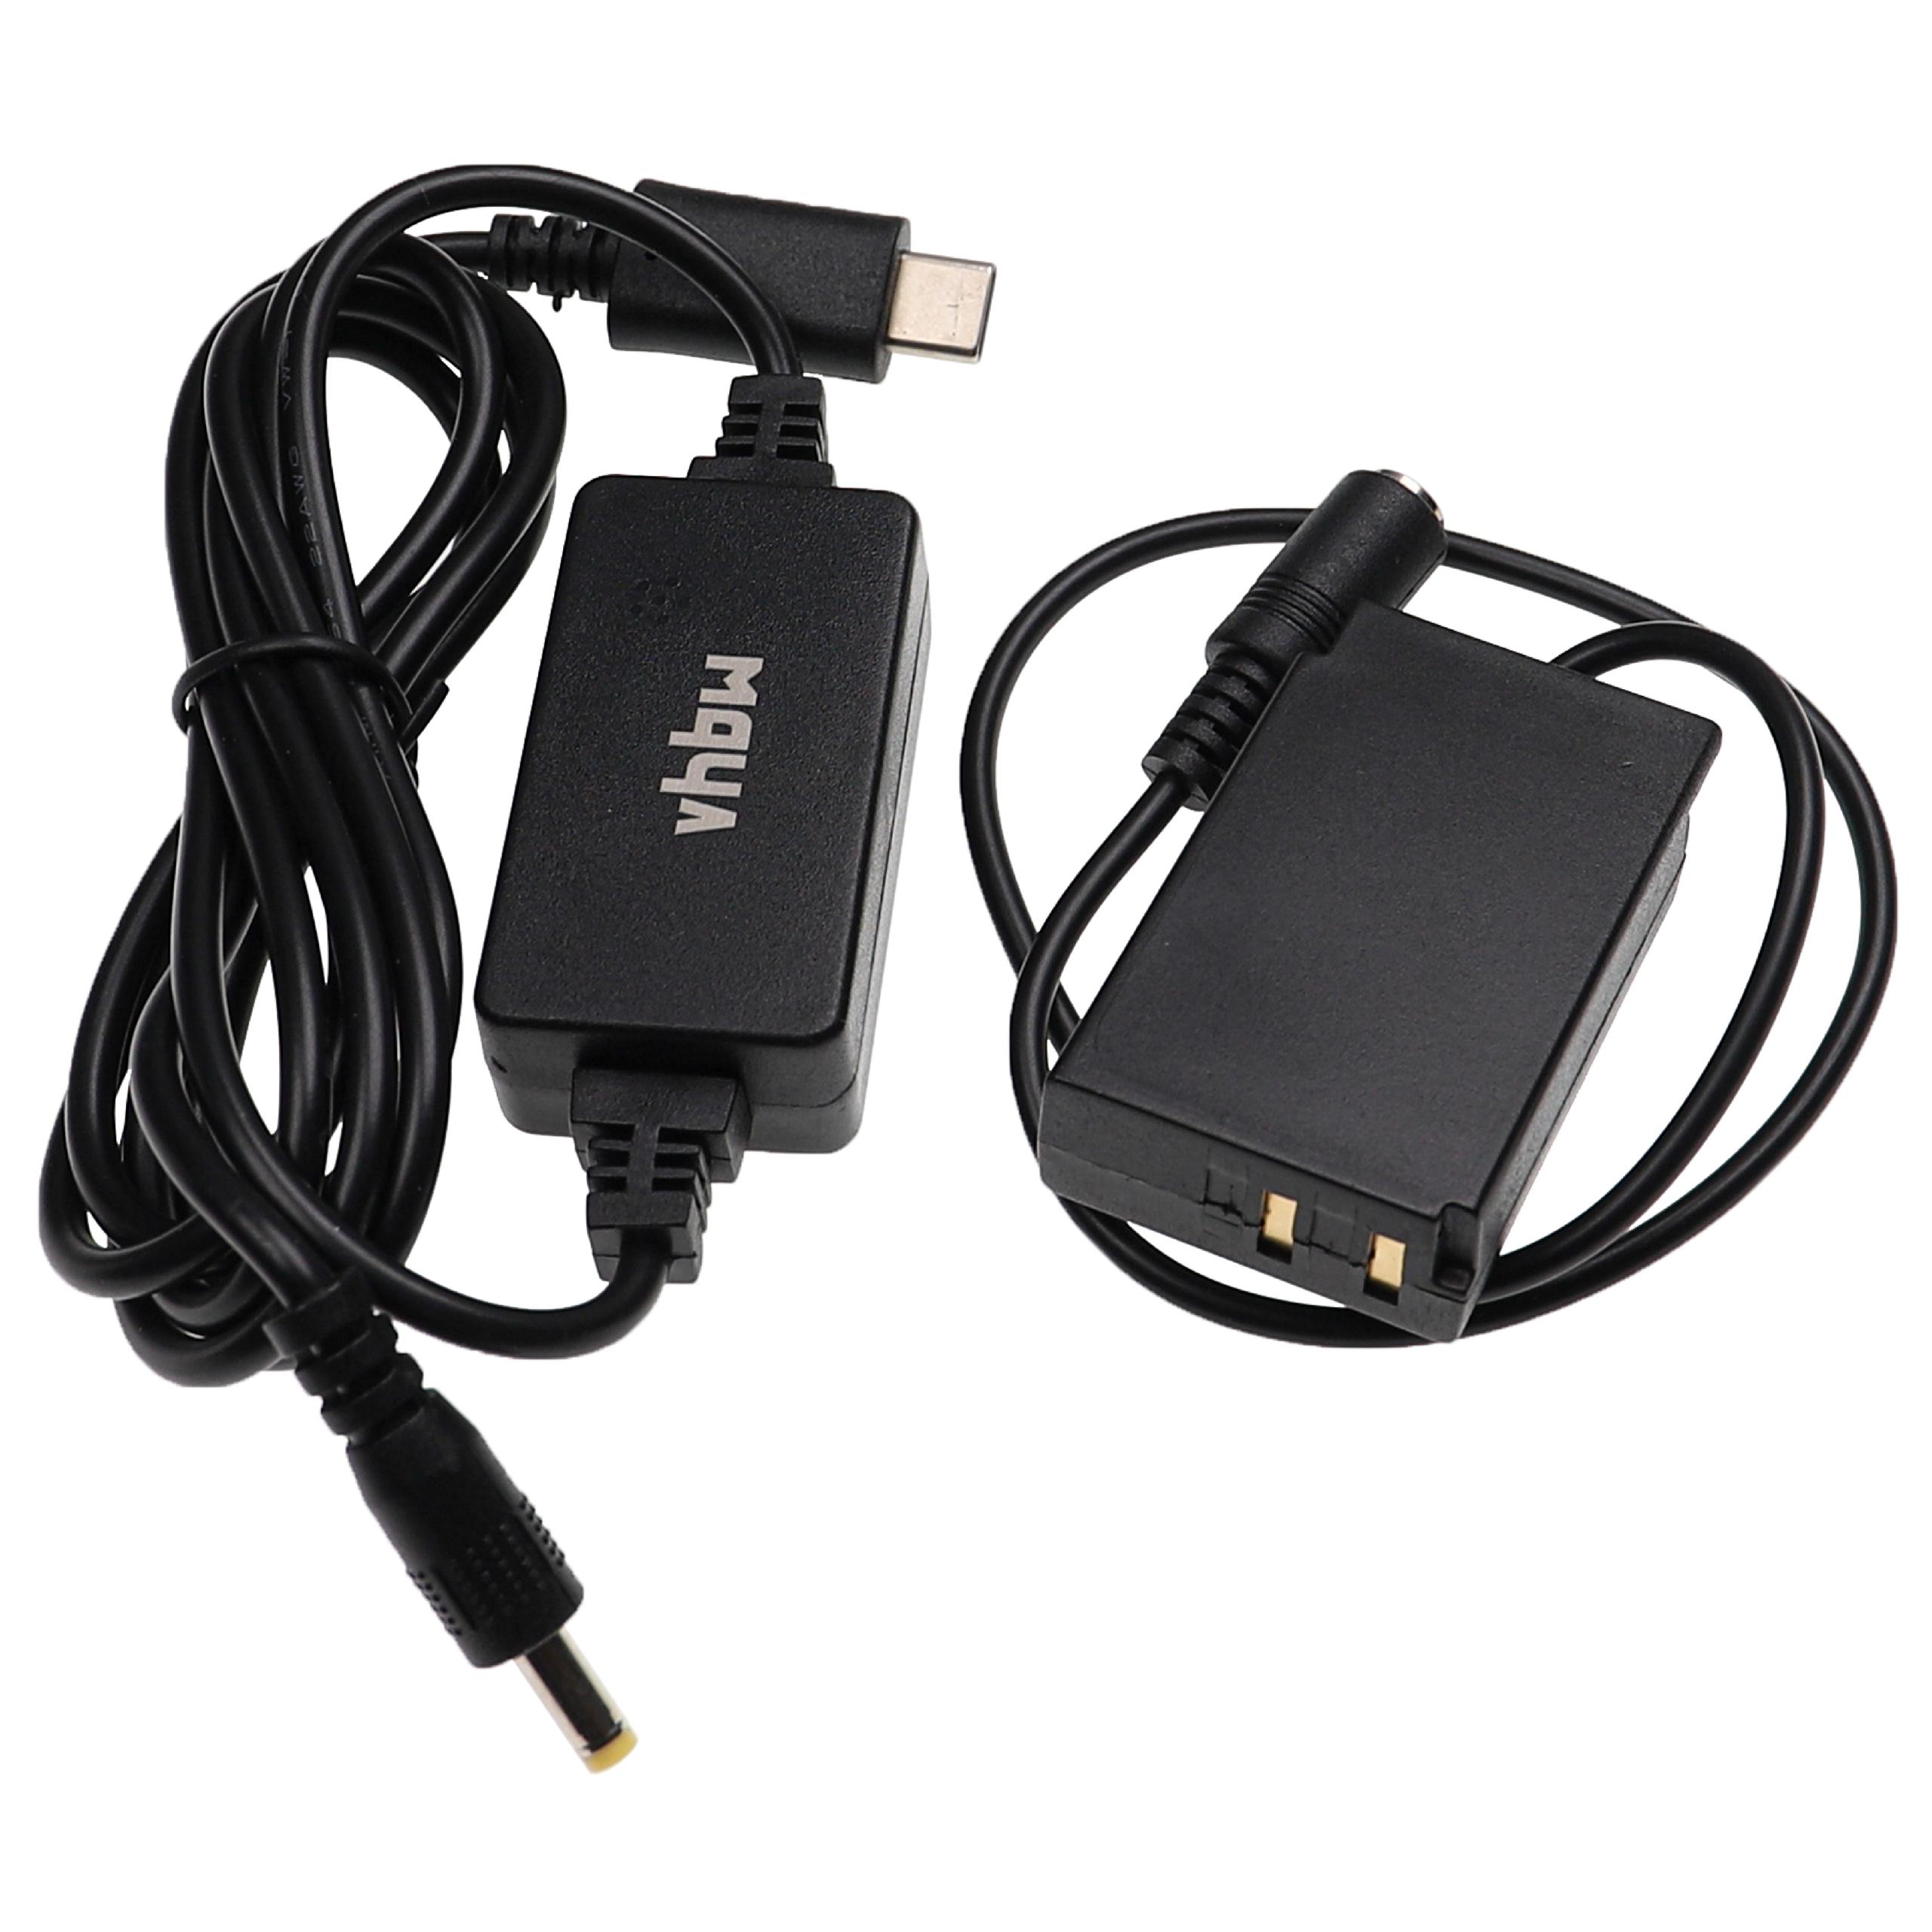 Zasilacz USB do aparatu zam. EH-5AEH-5 + adapter zam. Nikon EP-5E - 2 m, 9 V 3,0 A